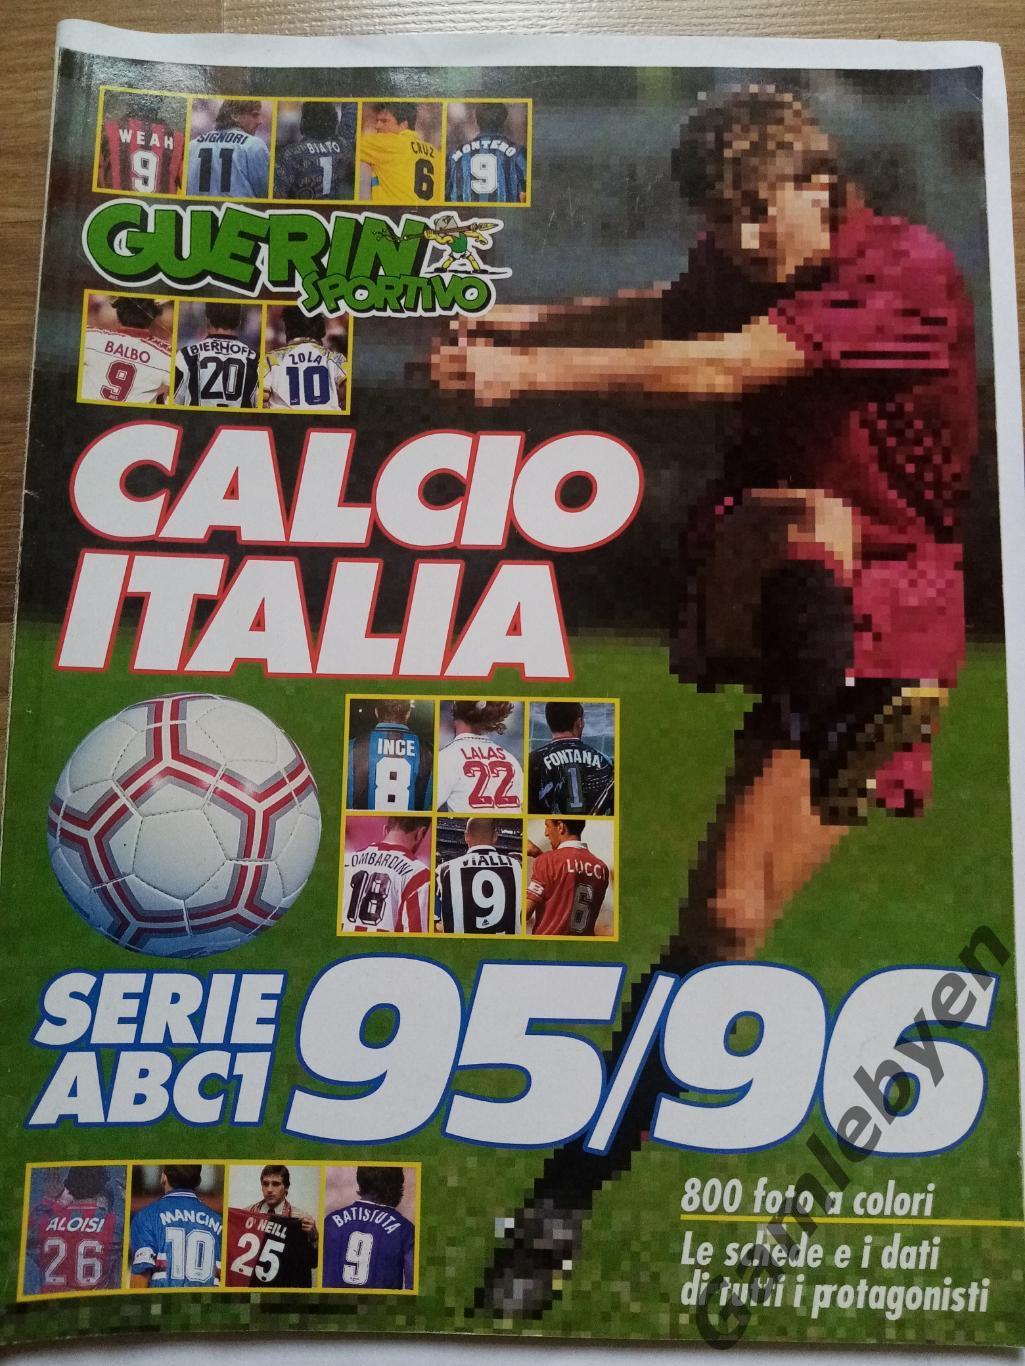 Спецвыпуск Guerin sportivo, сезон 95/96